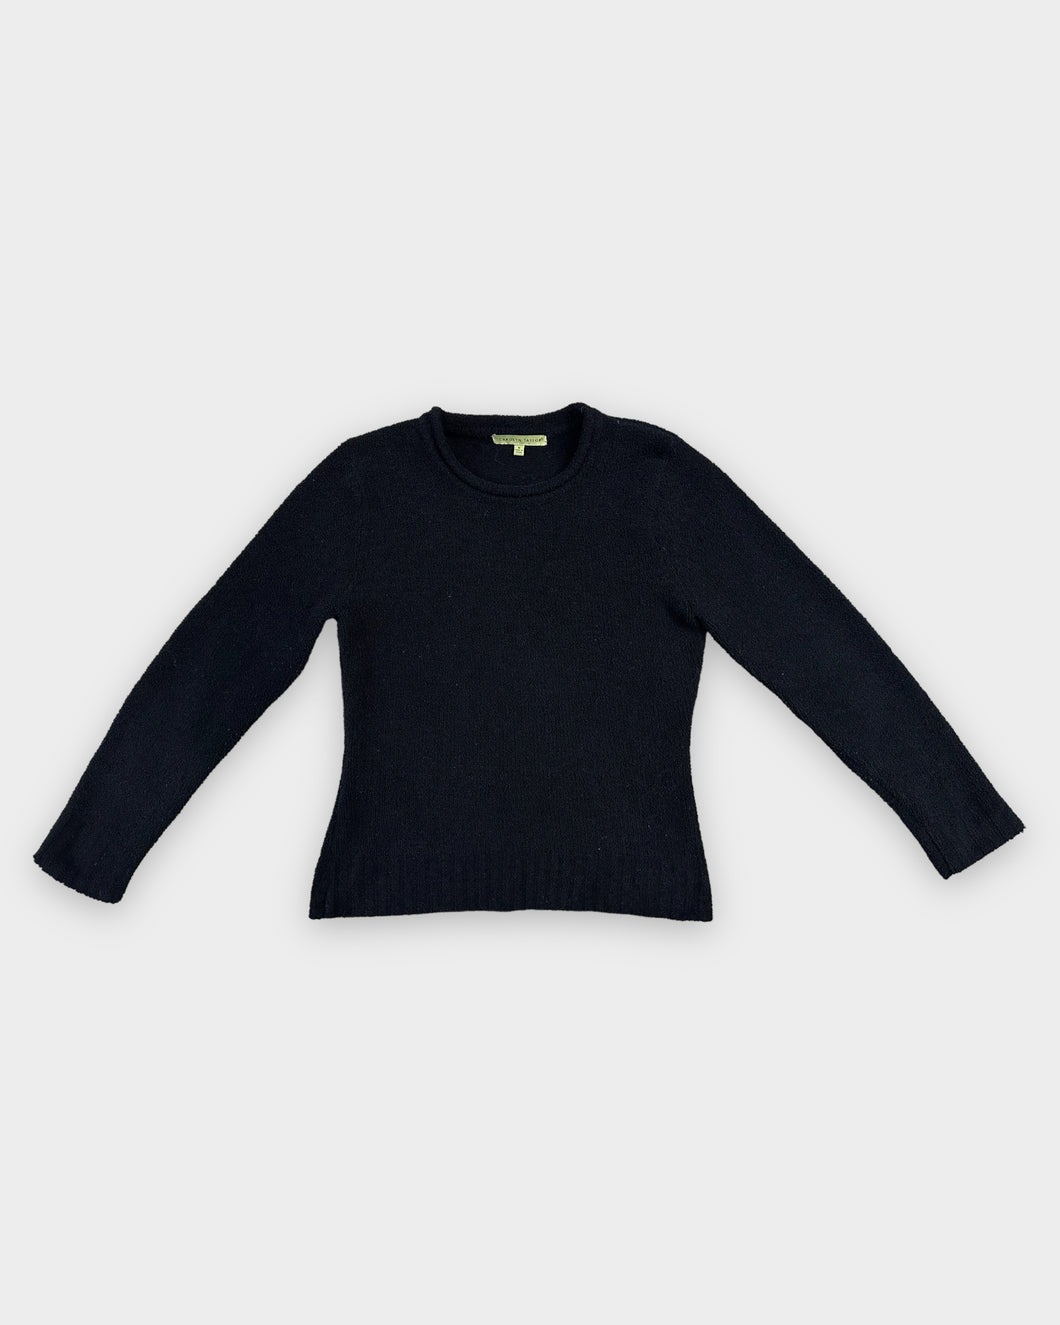 Carolyn Taylor Black Soft Knit Sweater (M)